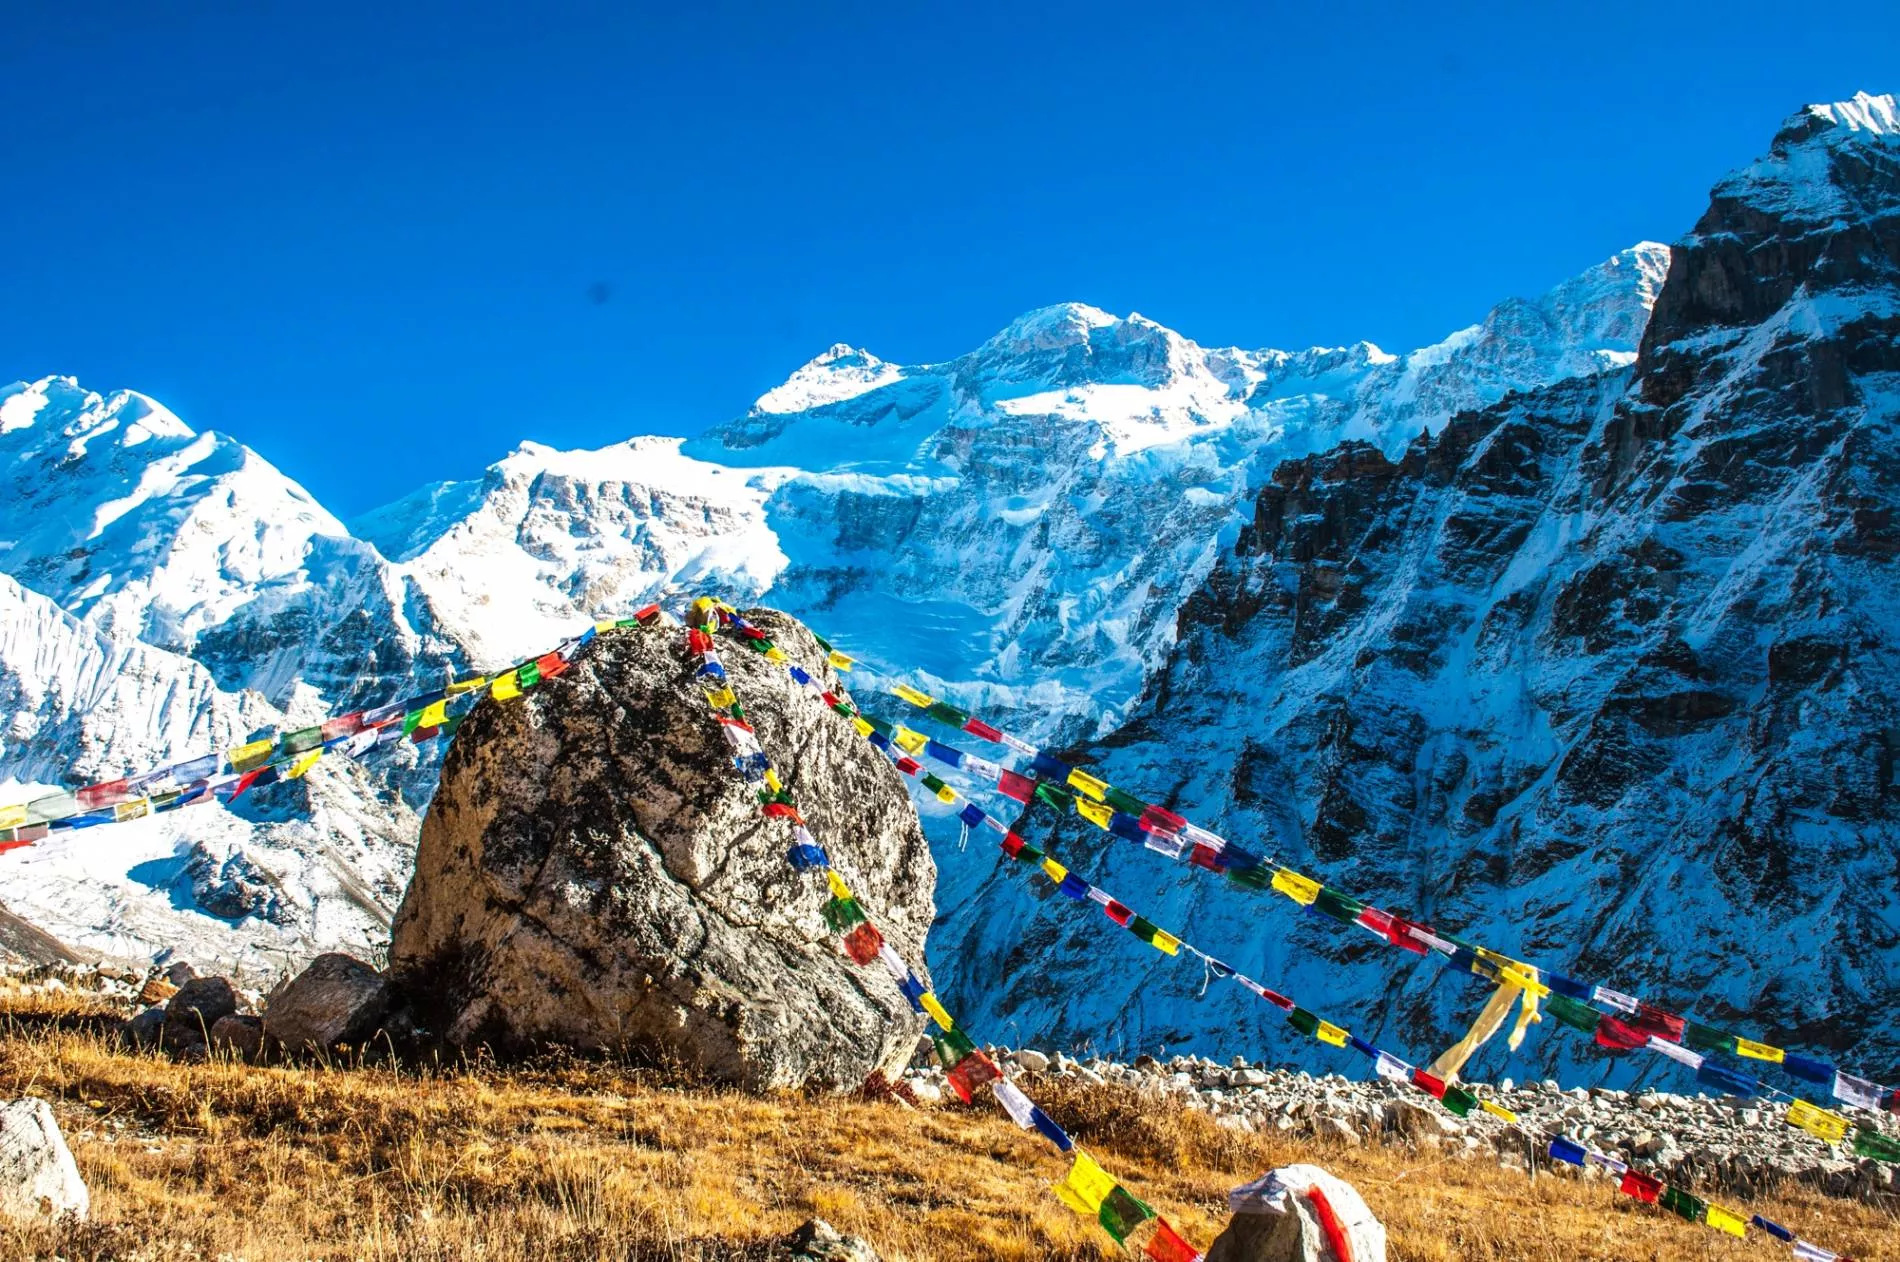 Kanchenjunga Base Camp Trek in Nepal, Central Asia | Trekking & Hiking - Rated 4.1